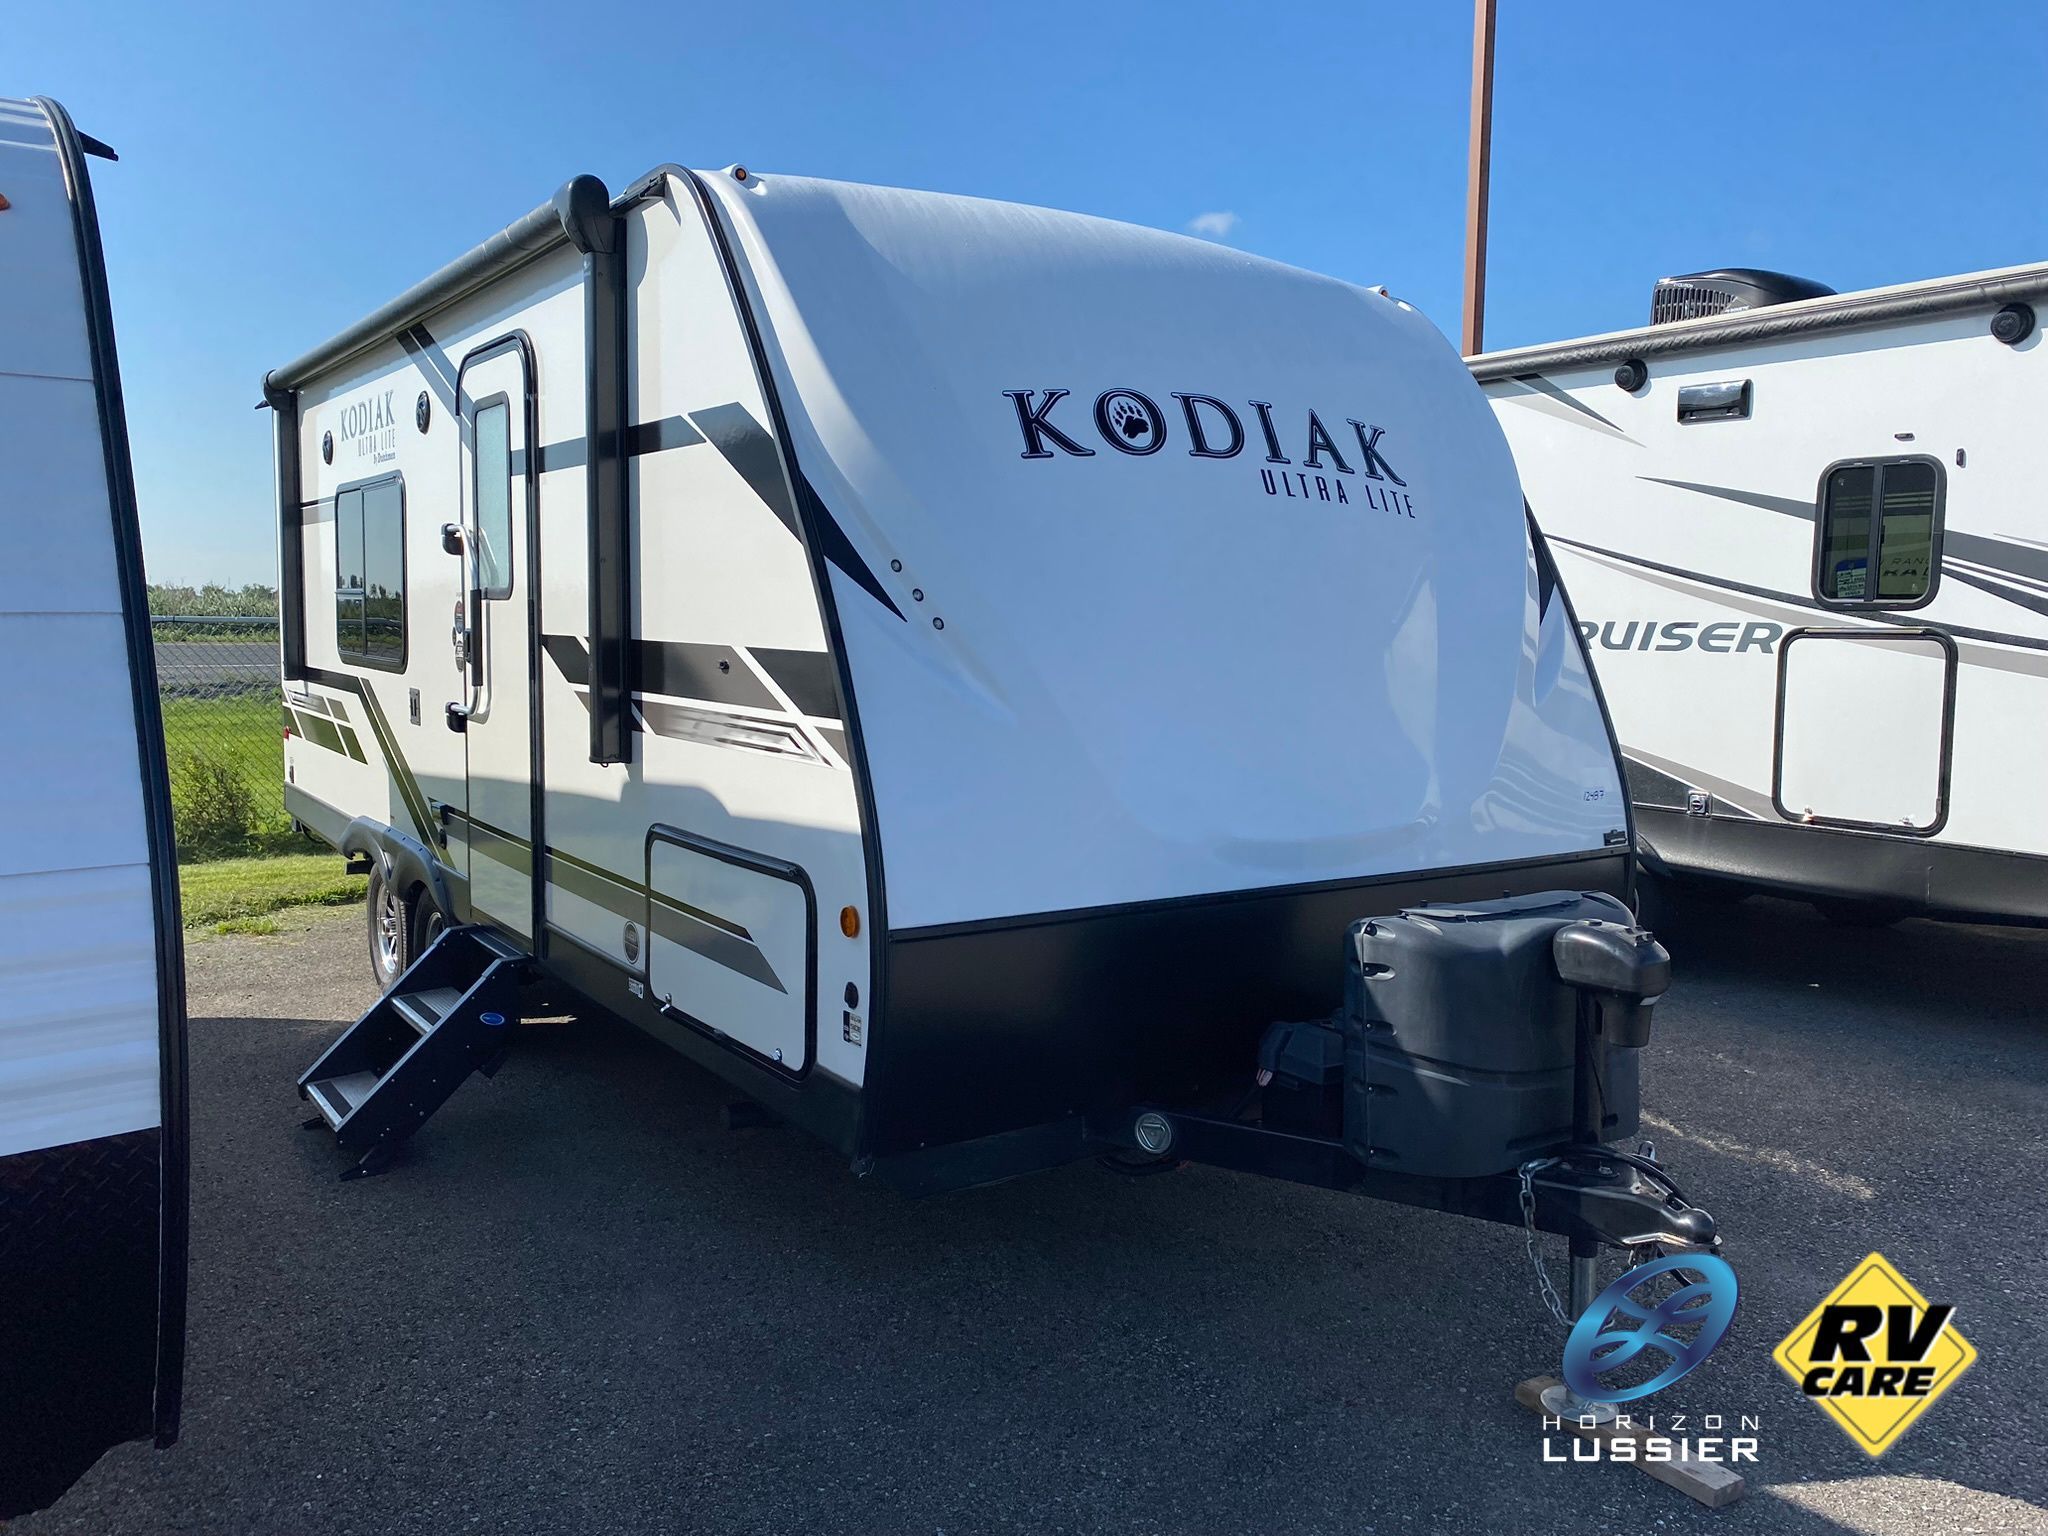 Kodiak Ultra-Lite  Ultra-Light Travel Trailers & Campers